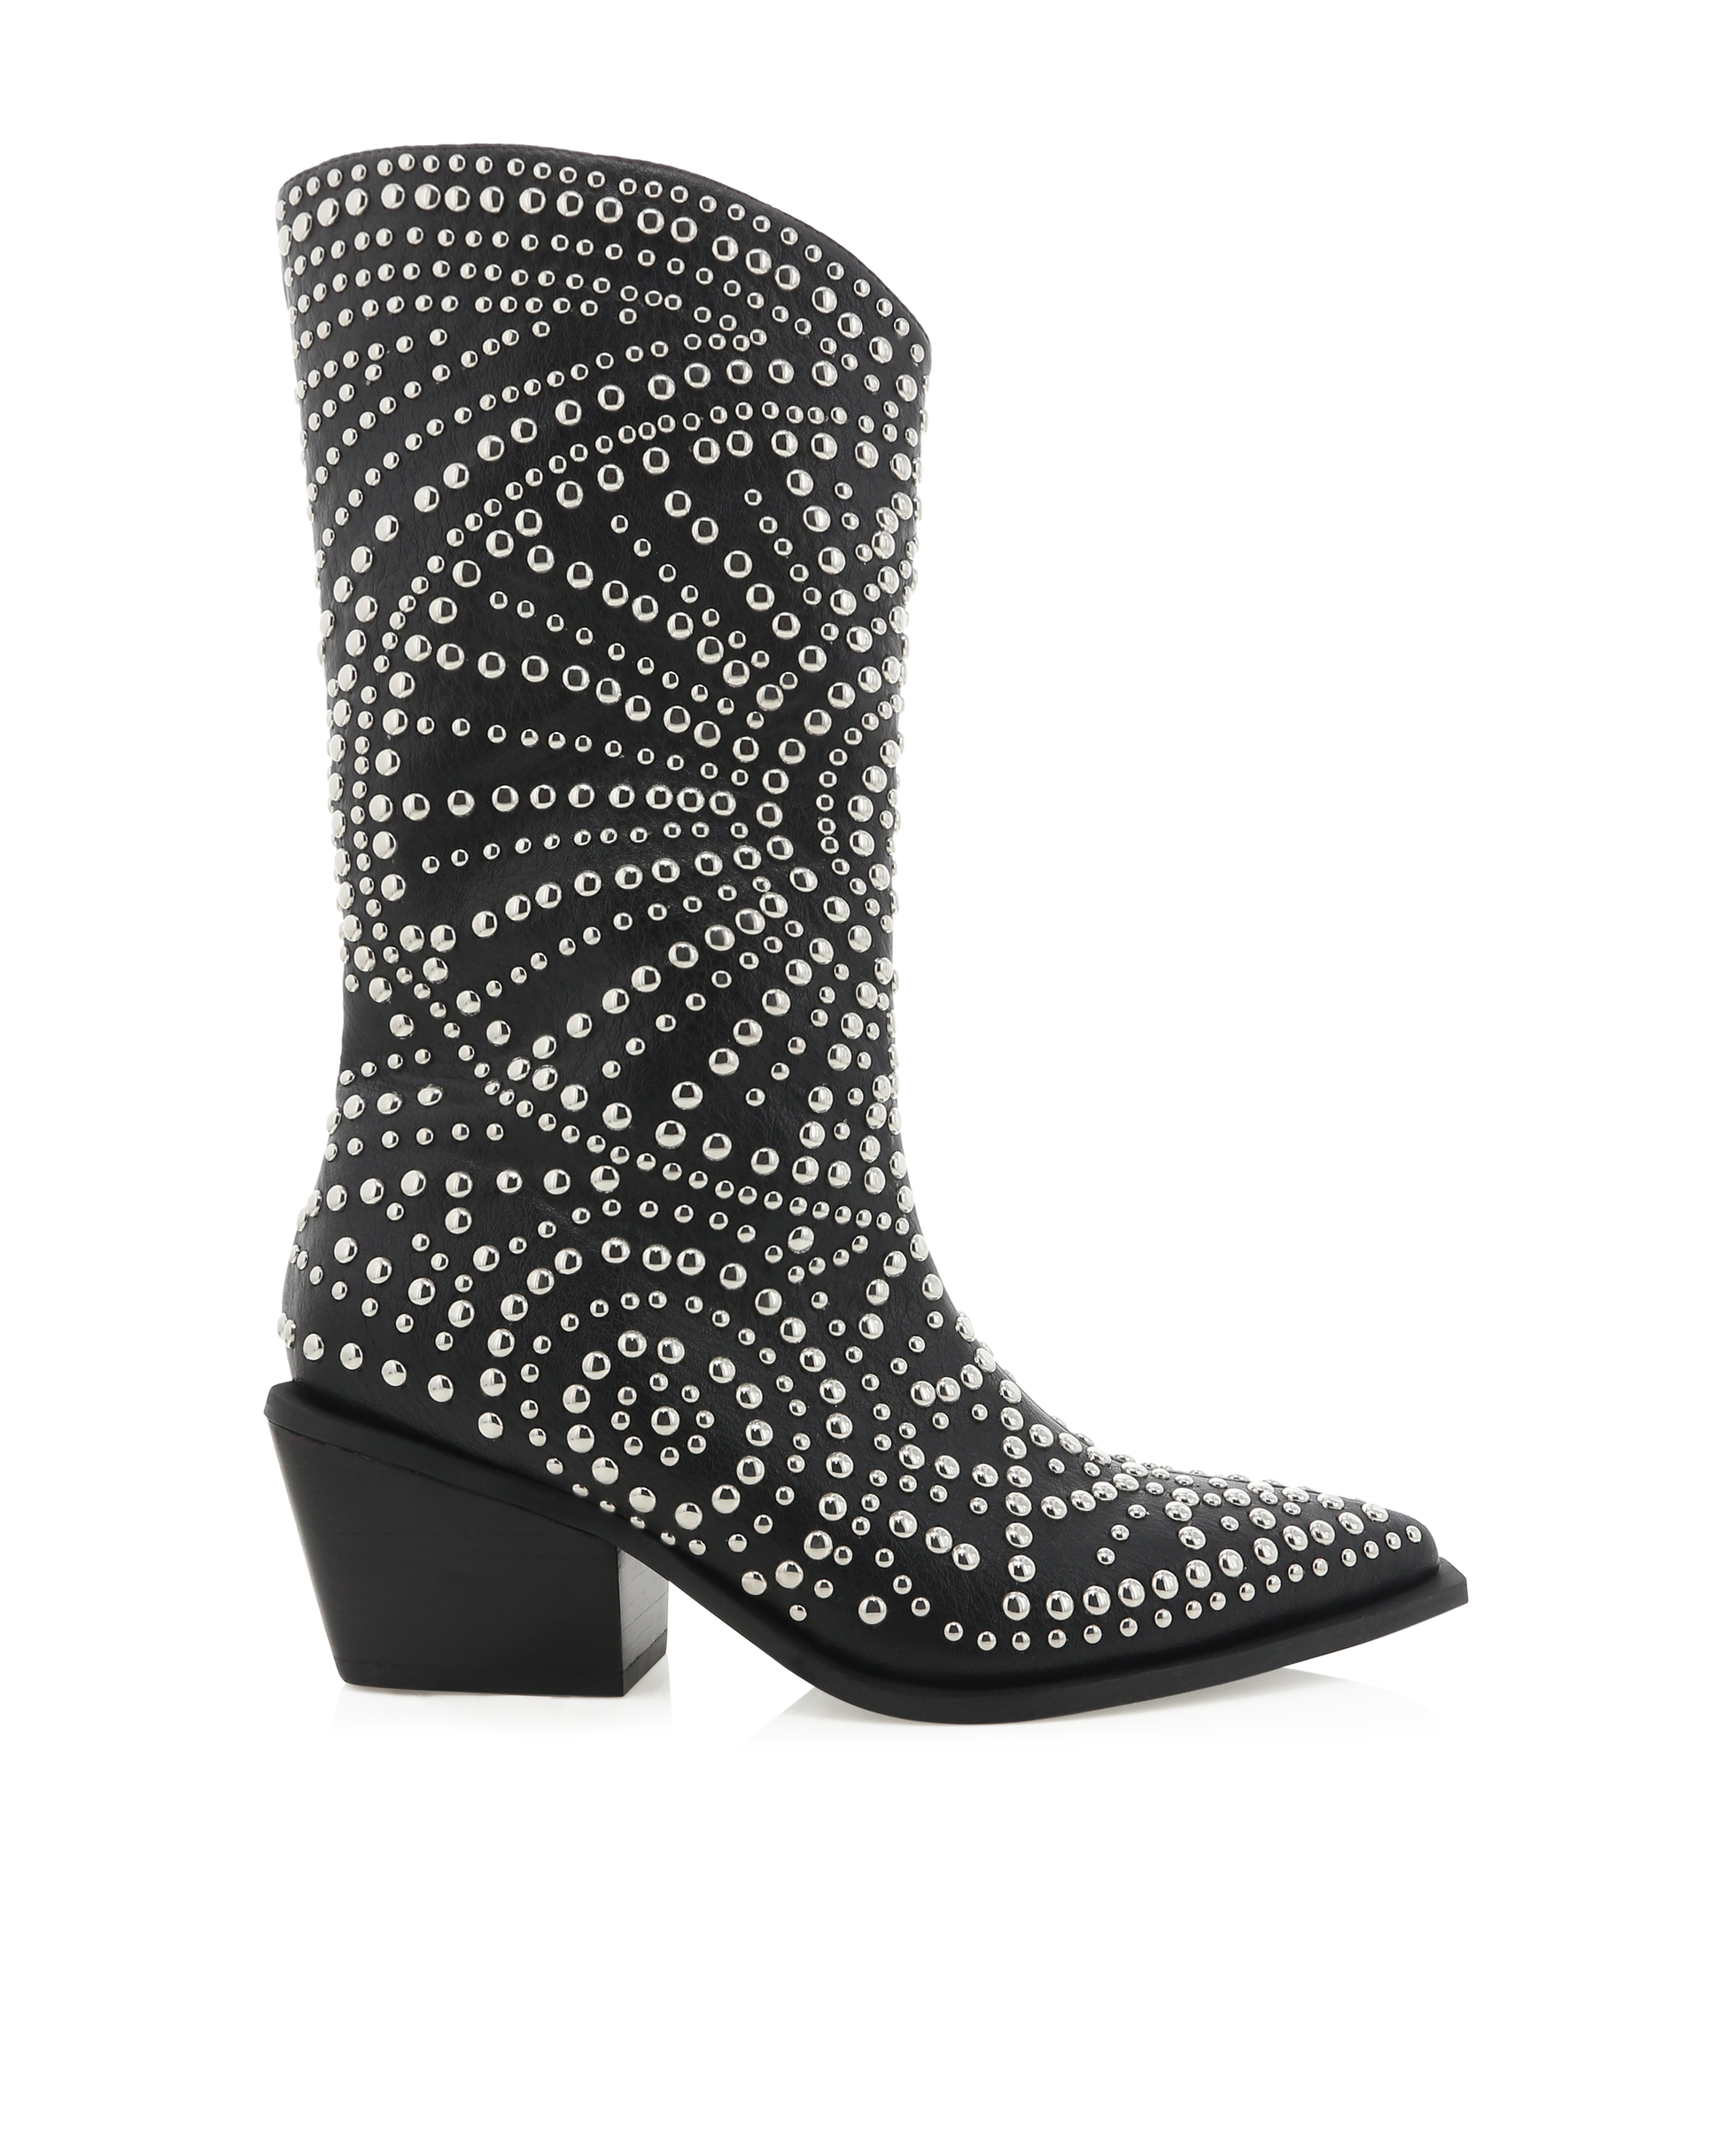 yori boot, a black mid leg cowboy boot with silver stud embellishments 